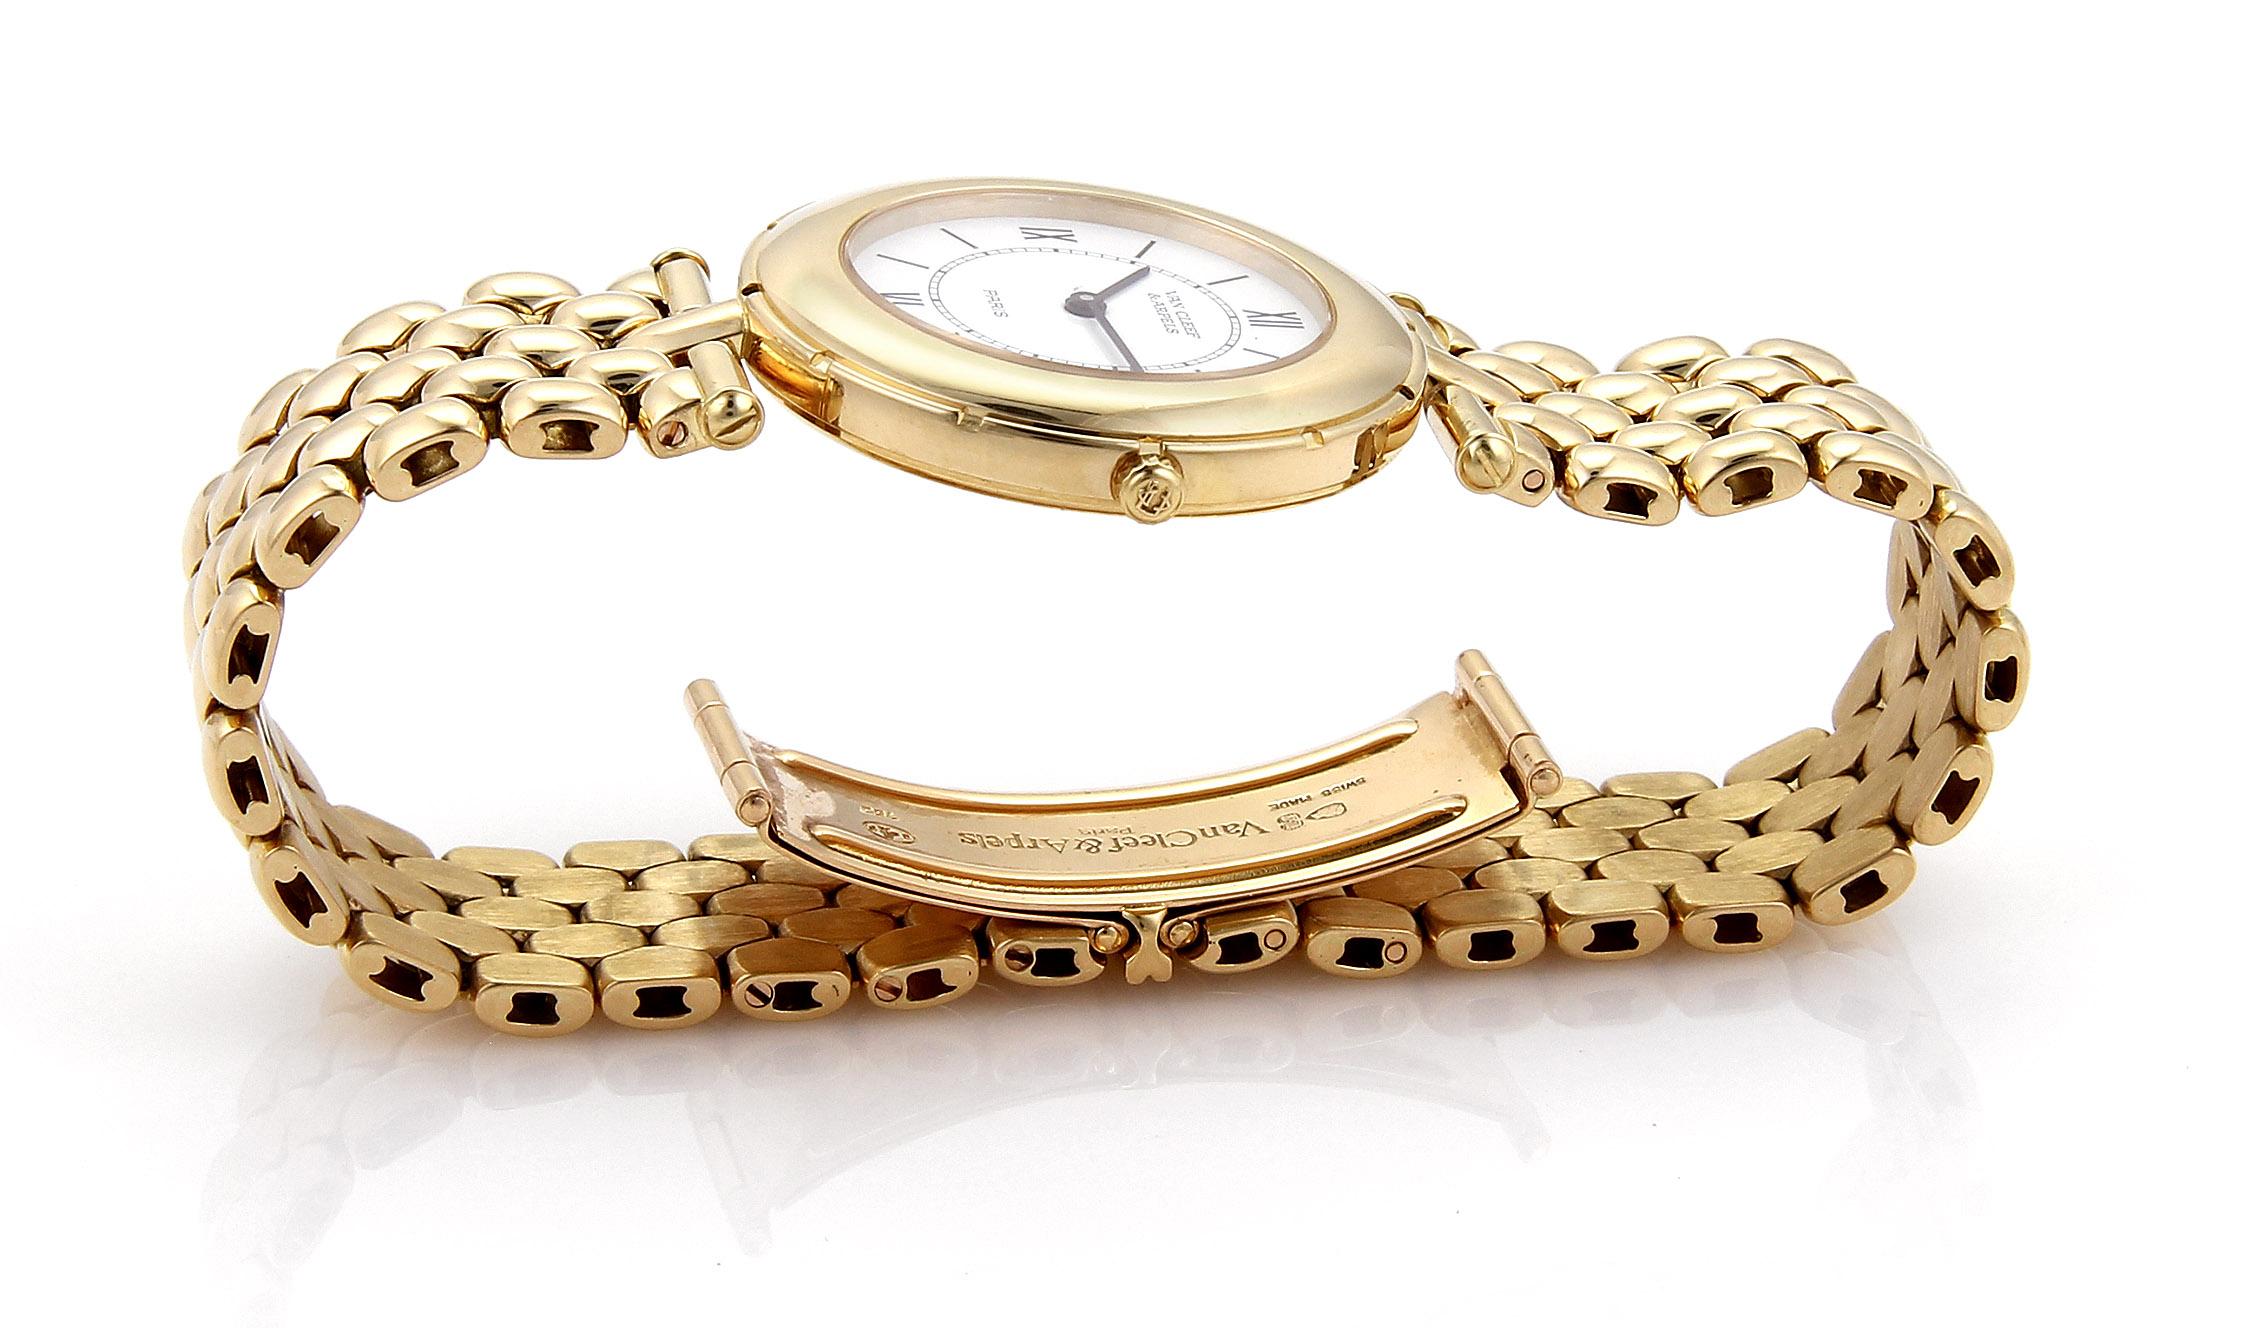 Van Cleef & Arpels 18k Yellow Gold Ladies Wrist Watch Quartz 13107 In Excellent Condition For Sale In Boca Raton, FL